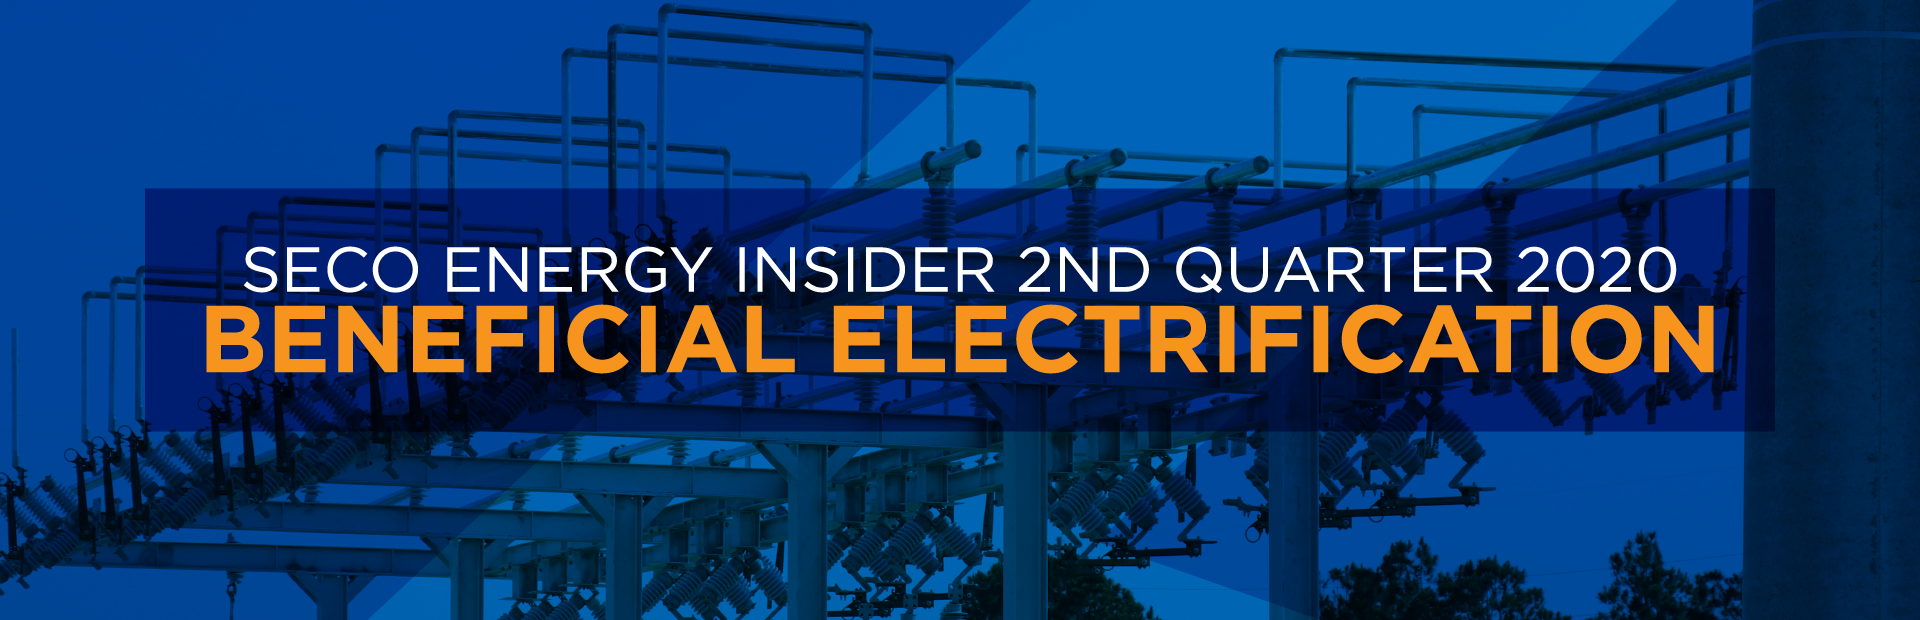 SECO Insider: SECO Energy Insider 2nd Quarter 2020 - Beneficial Electrification